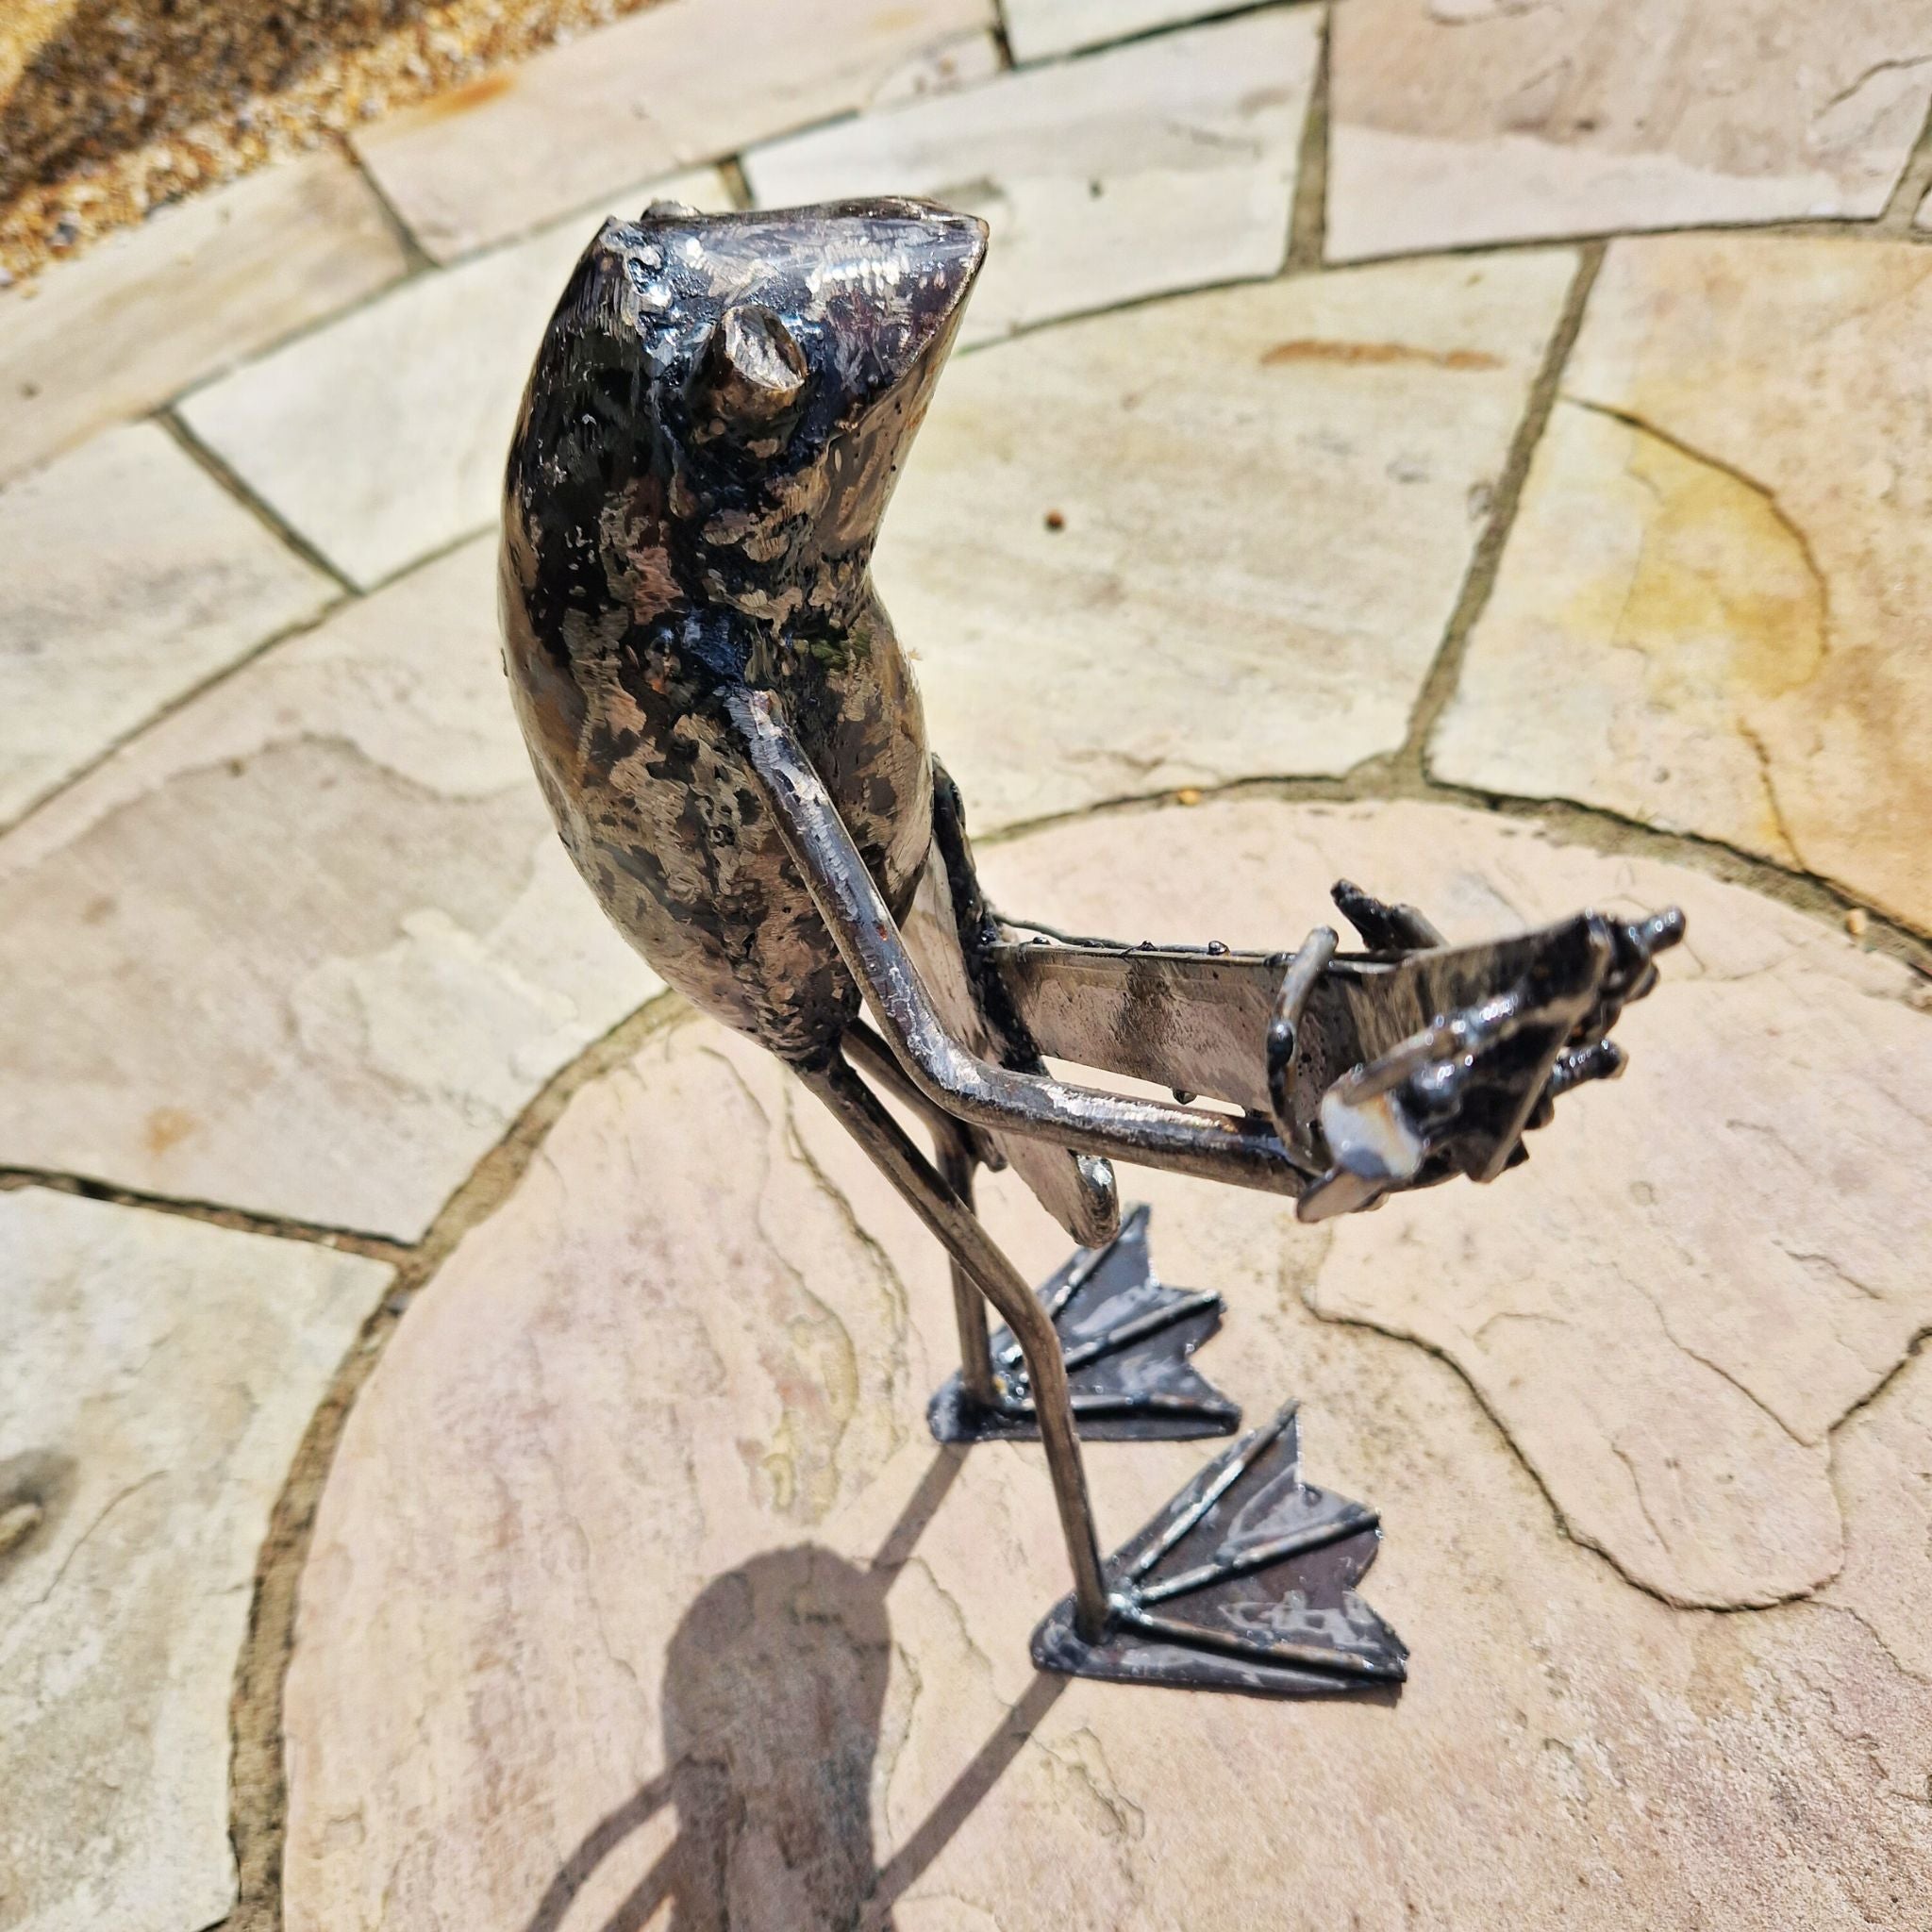 Guitar Frog - Pangea Sculptures